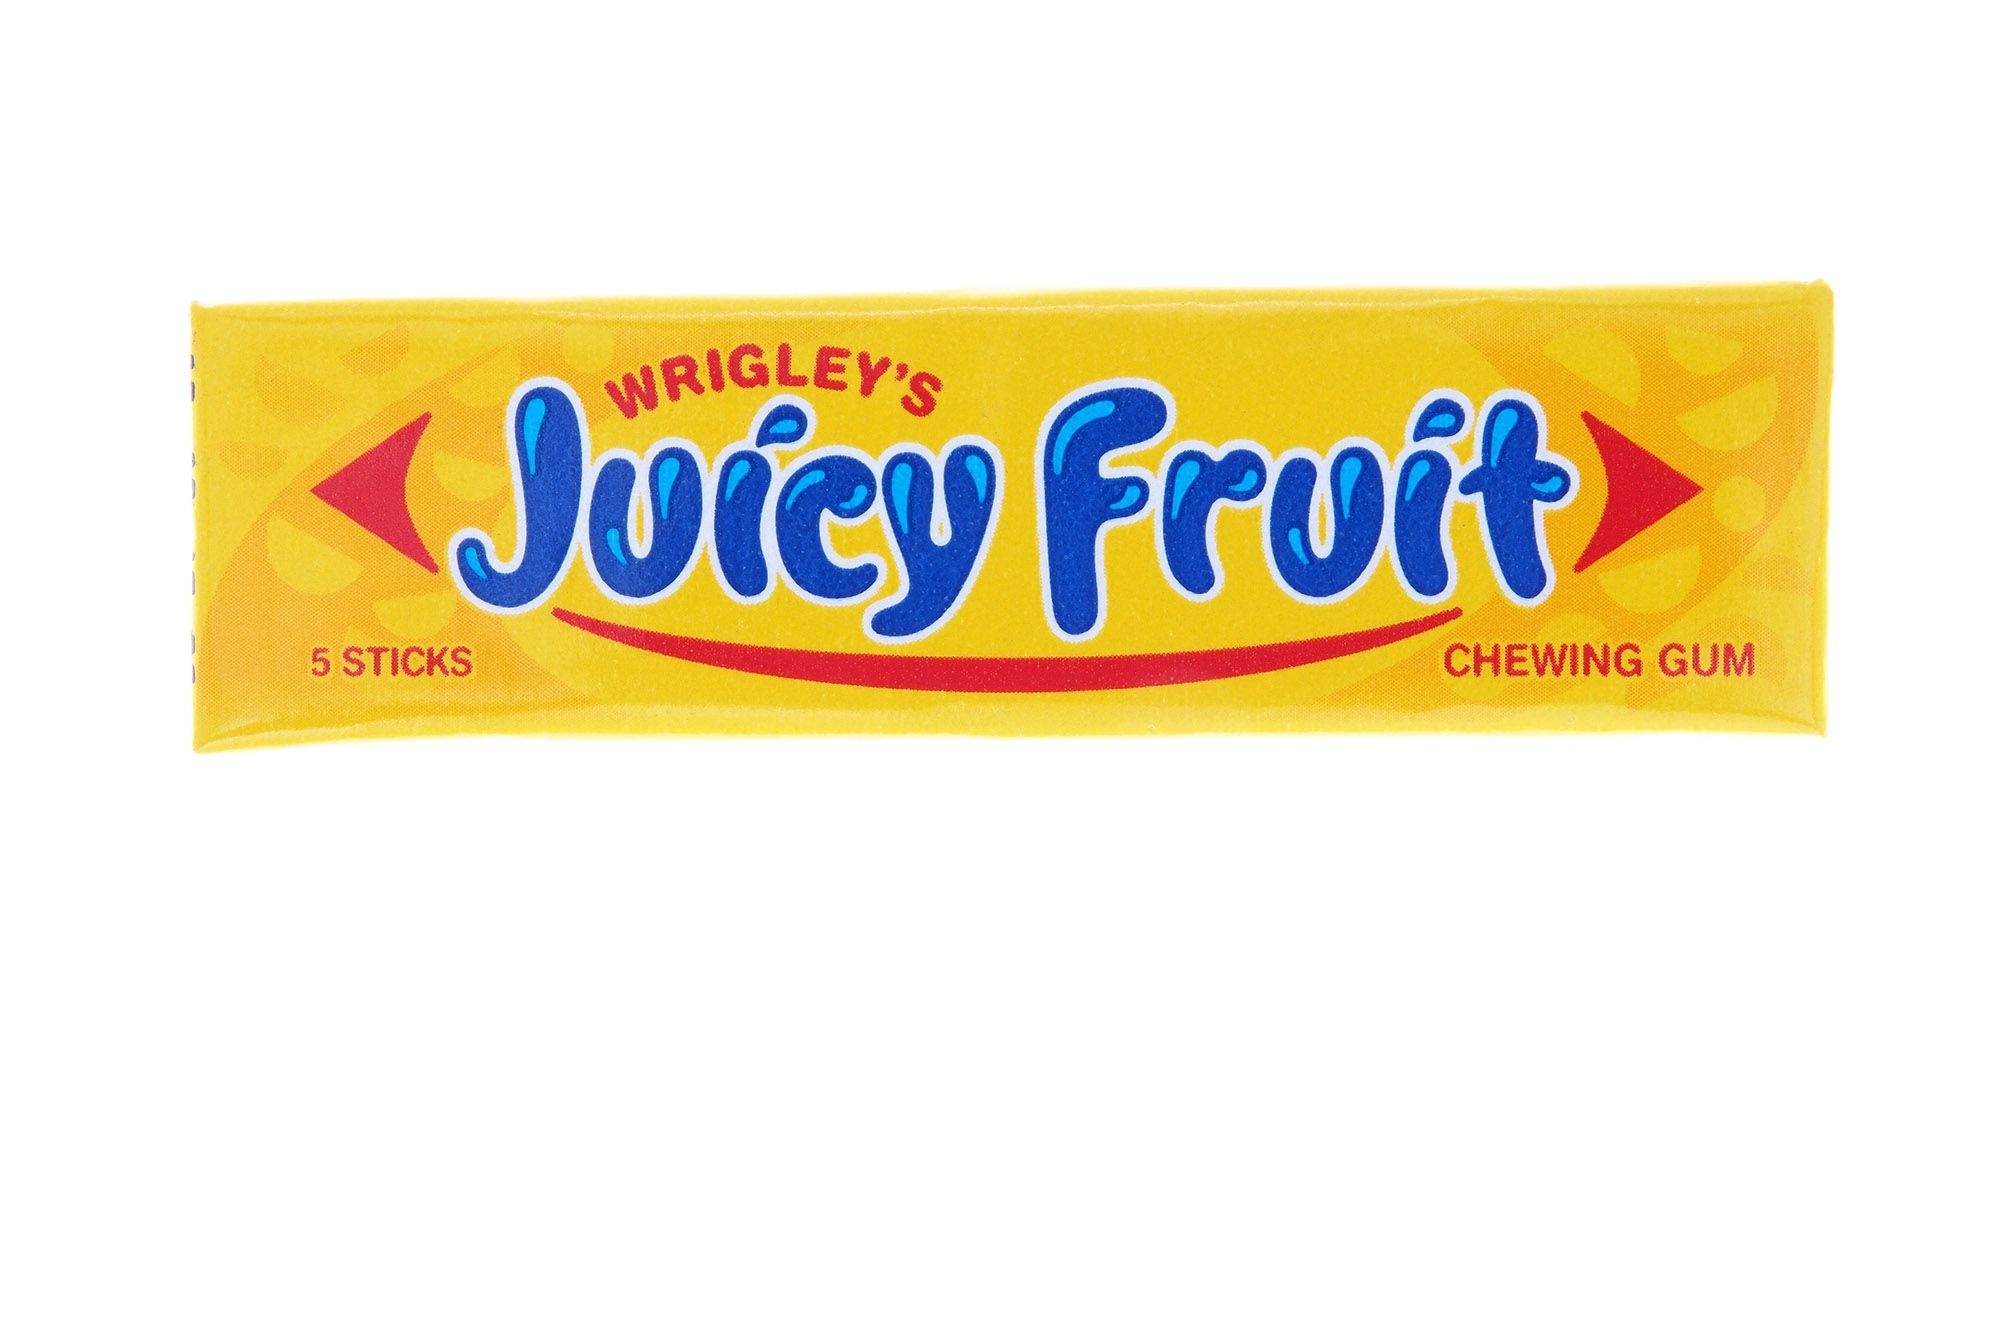 juicy fruit gum on kitchen table